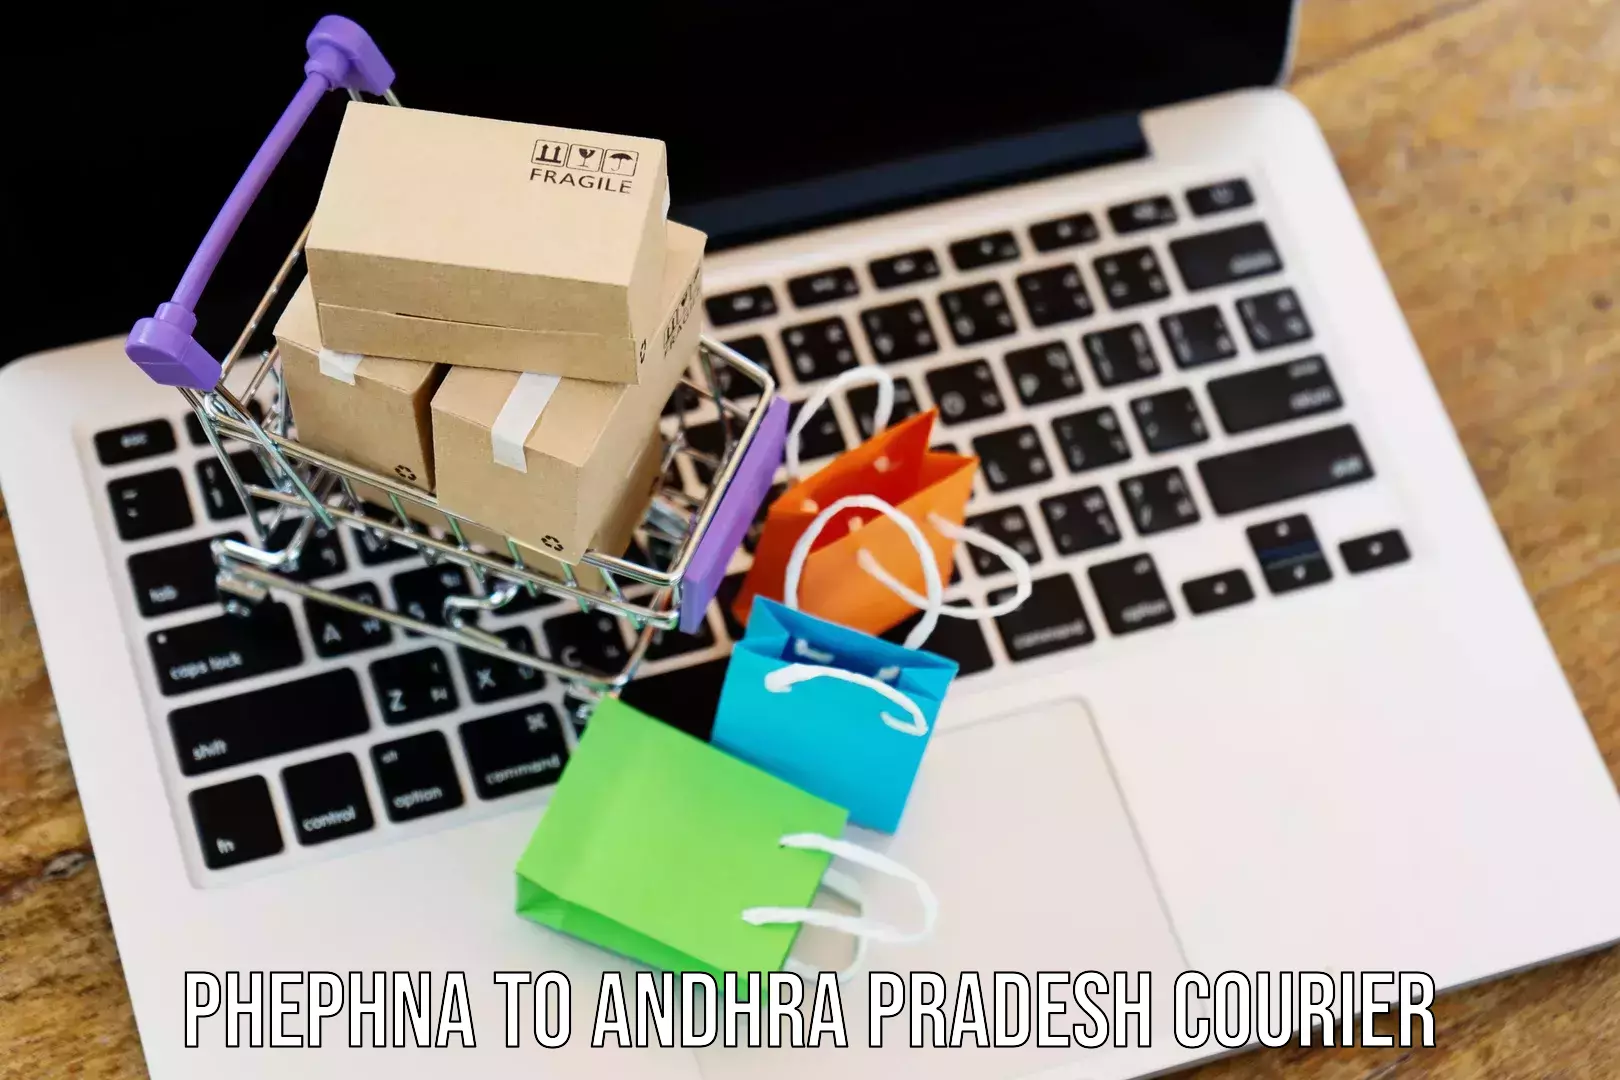 Digital courier platforms Phephna to Addateegala